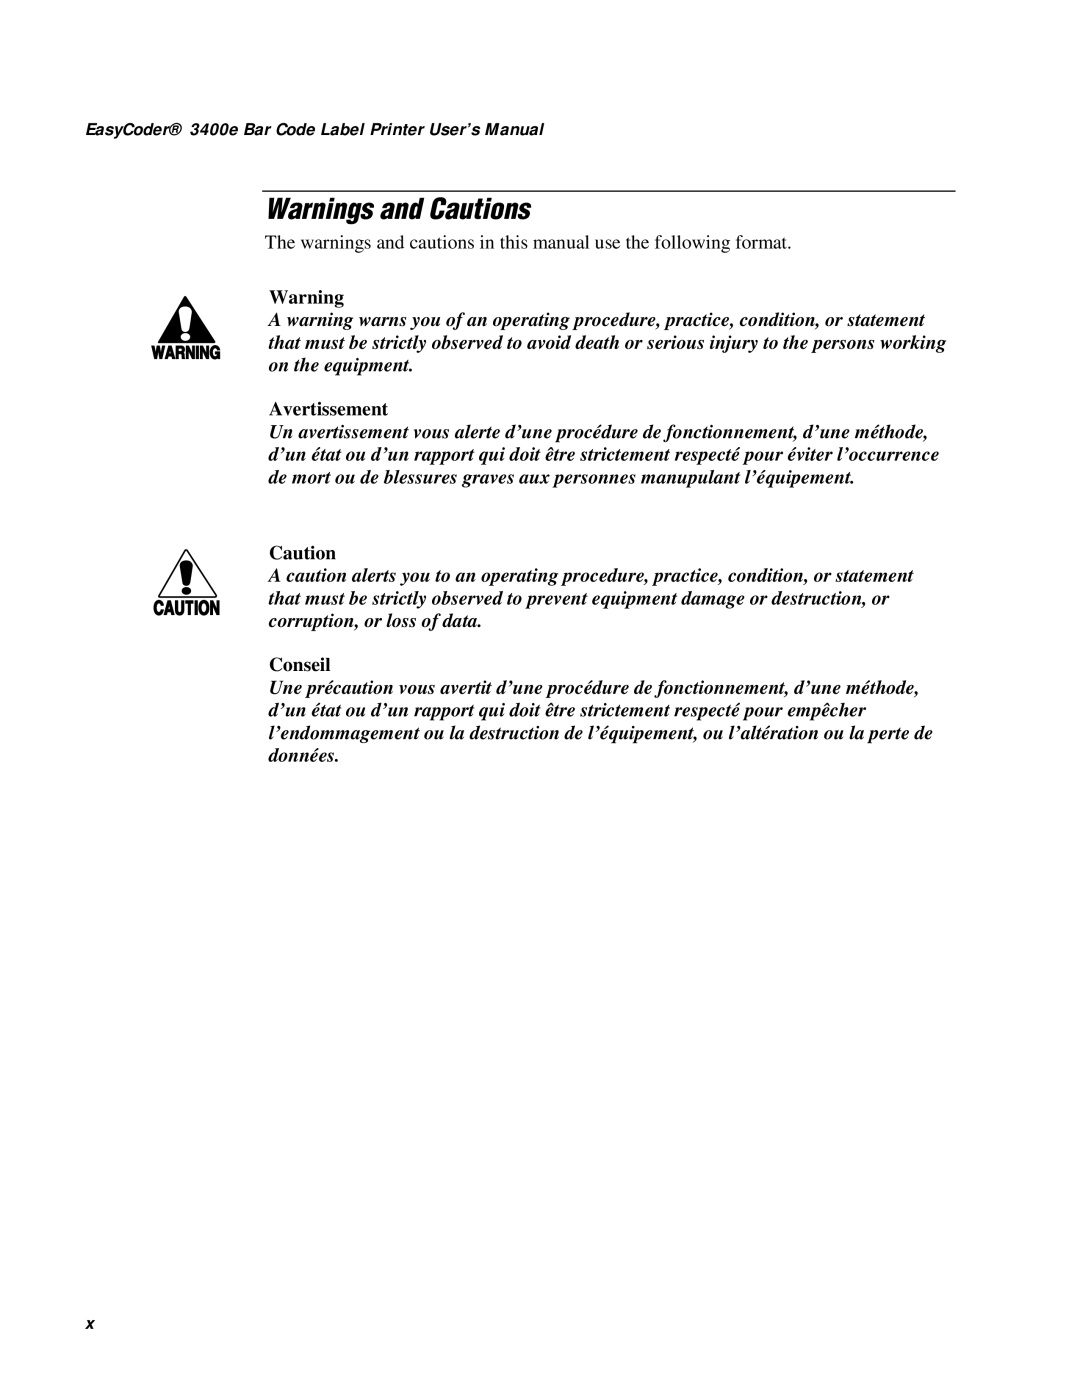 IBM user manual Warnings and Cautions, EasyCoder 3400e Bar Code Label Printer User’s Manual, Avertissement, Conseil 